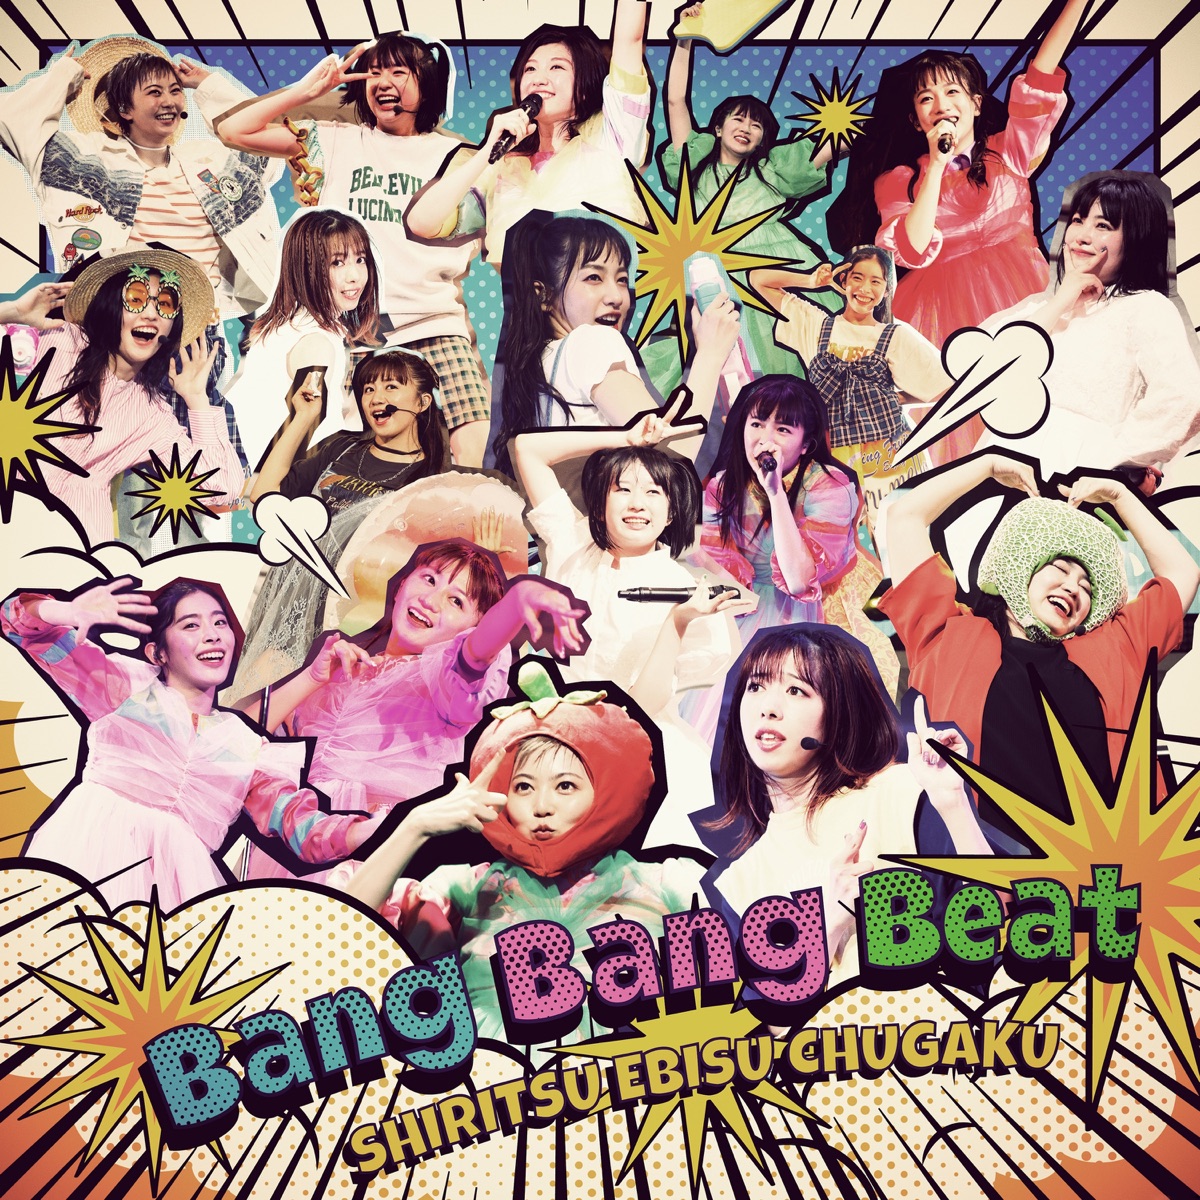 Cover art for『Shiritsu Ebisu Chuugaku - Bang Bang Beat』from the release『Bang Bang Beat